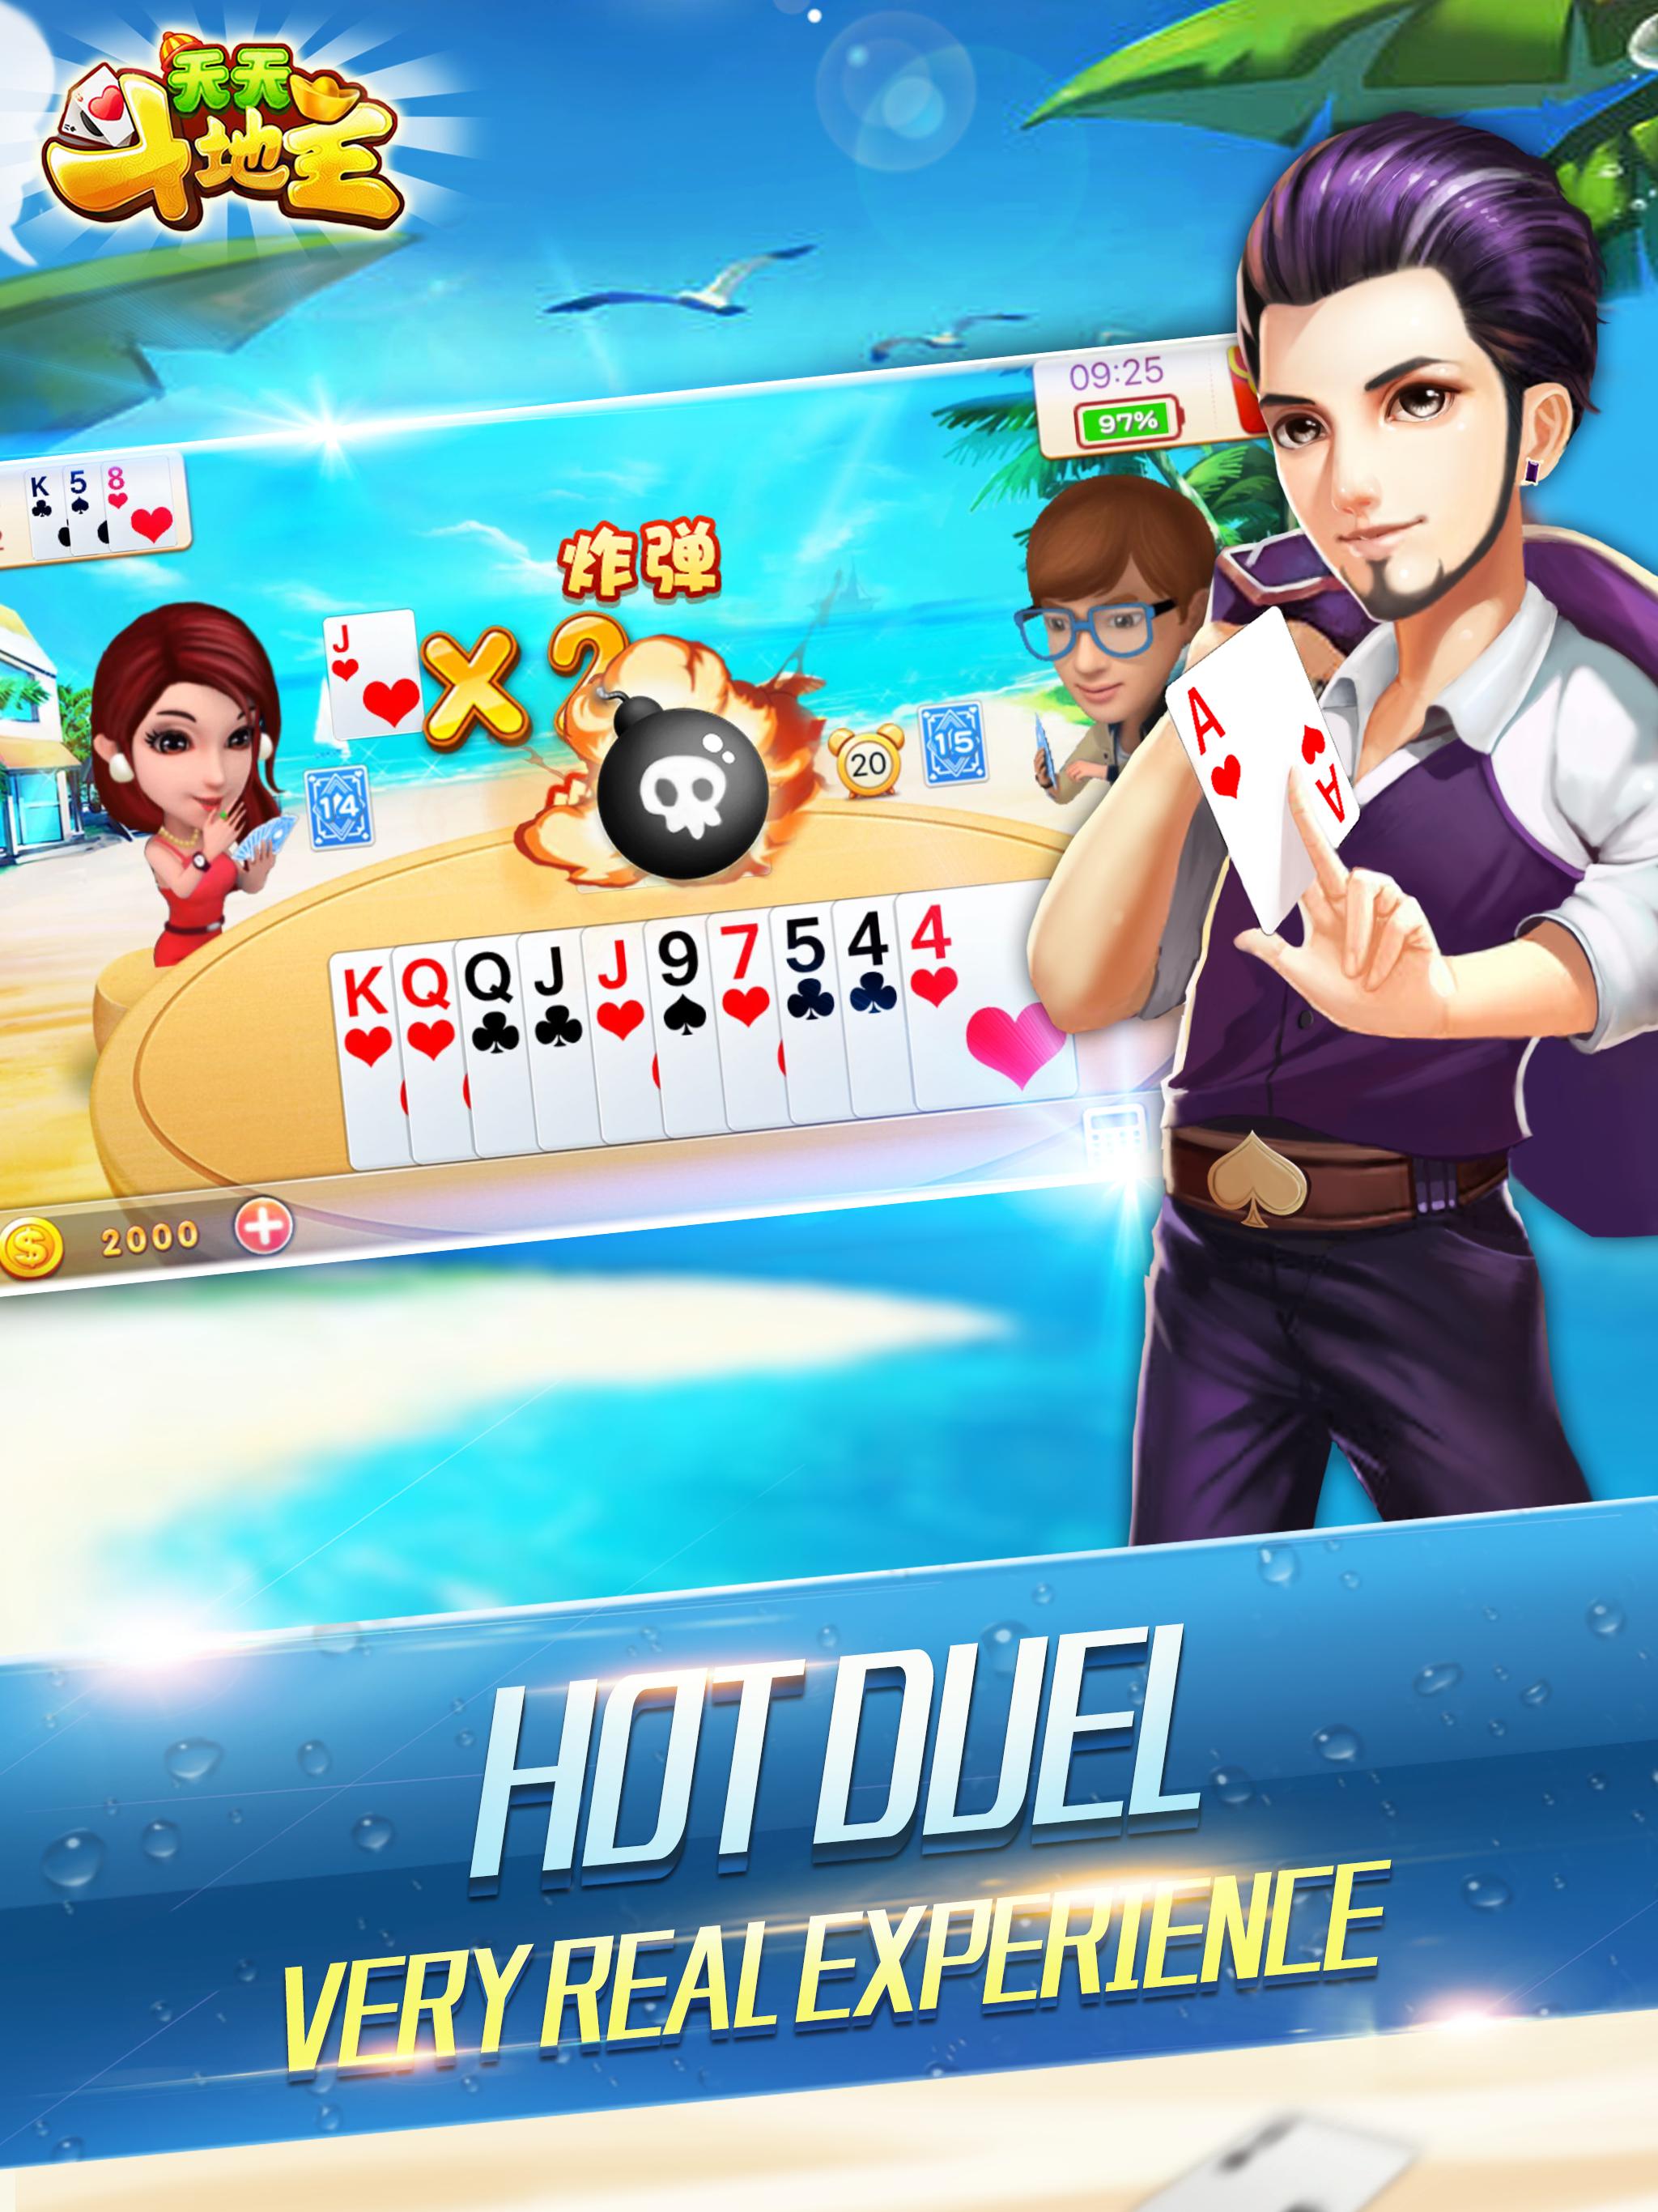 landlords-casino game and card game 1.0 Screenshot 10